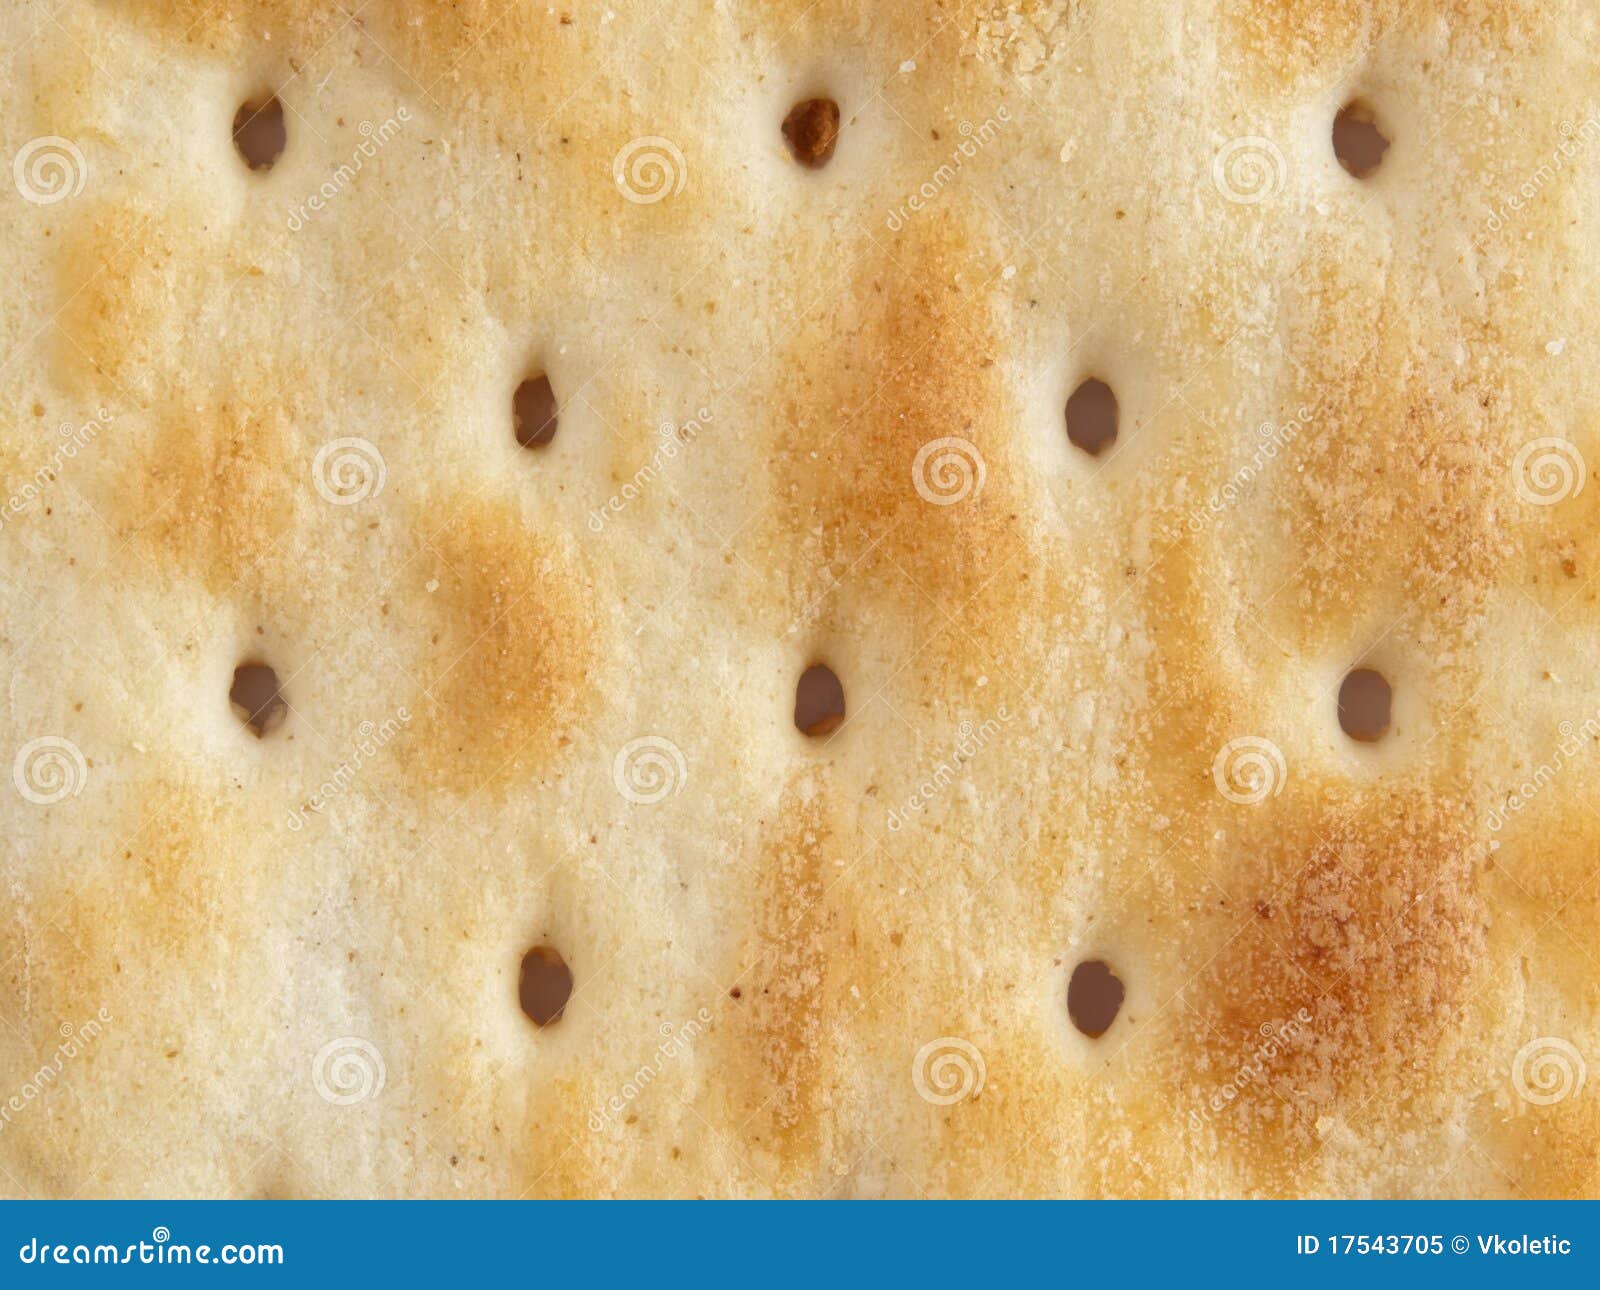 salty cracker